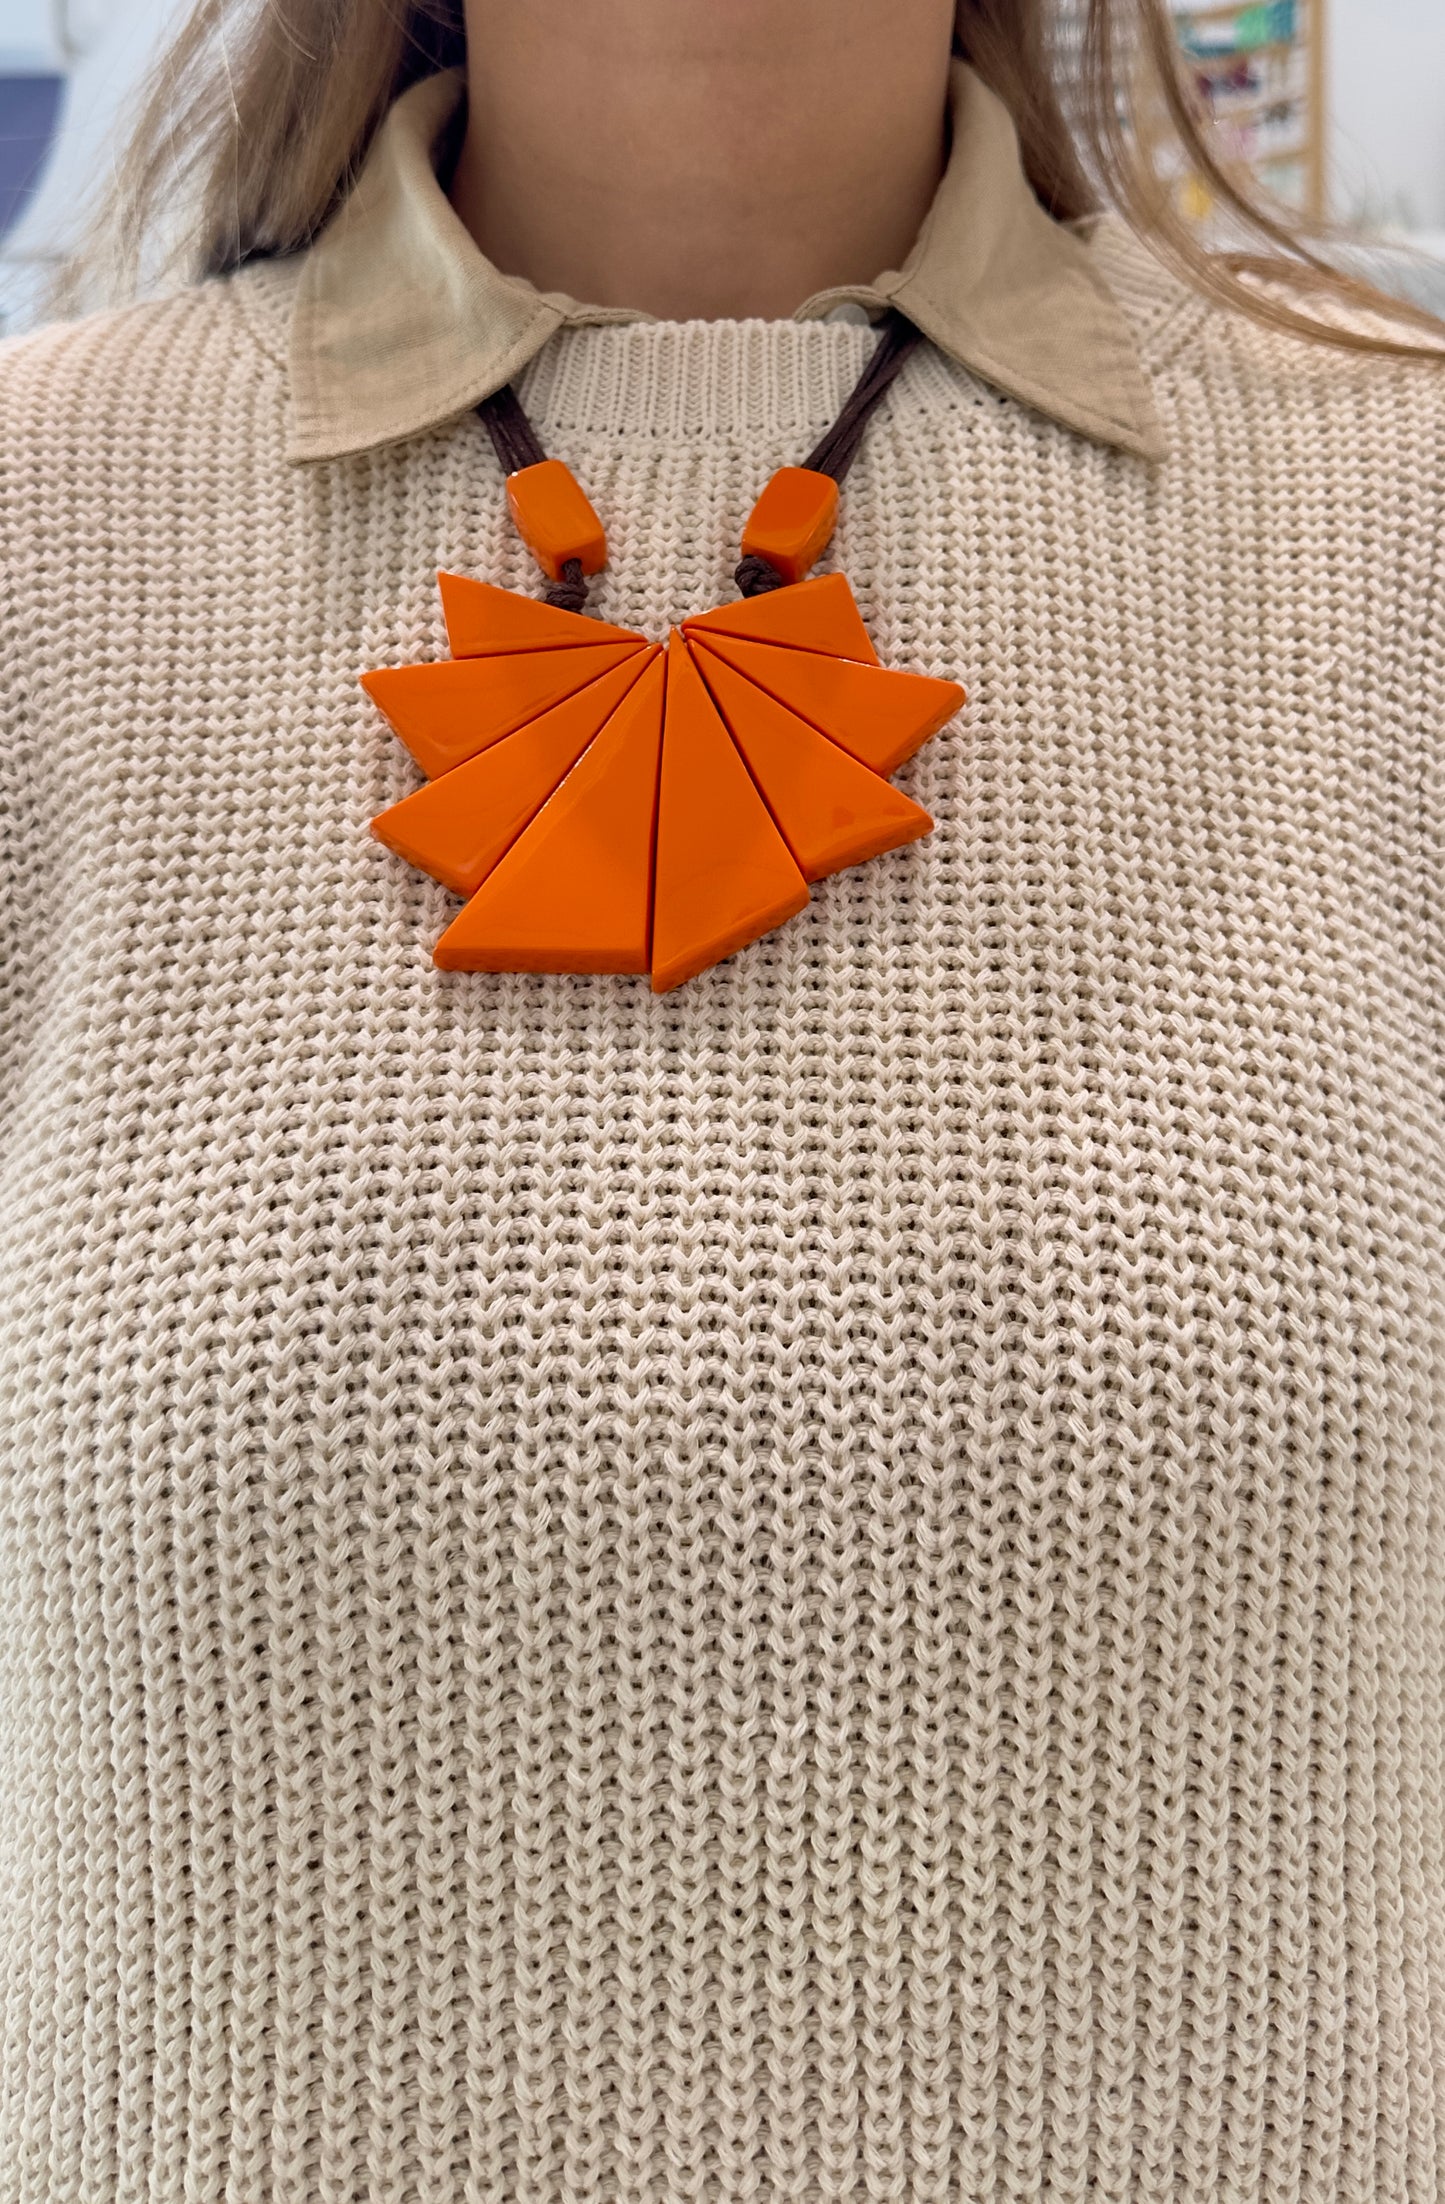 Copenhagen Orange Necklace